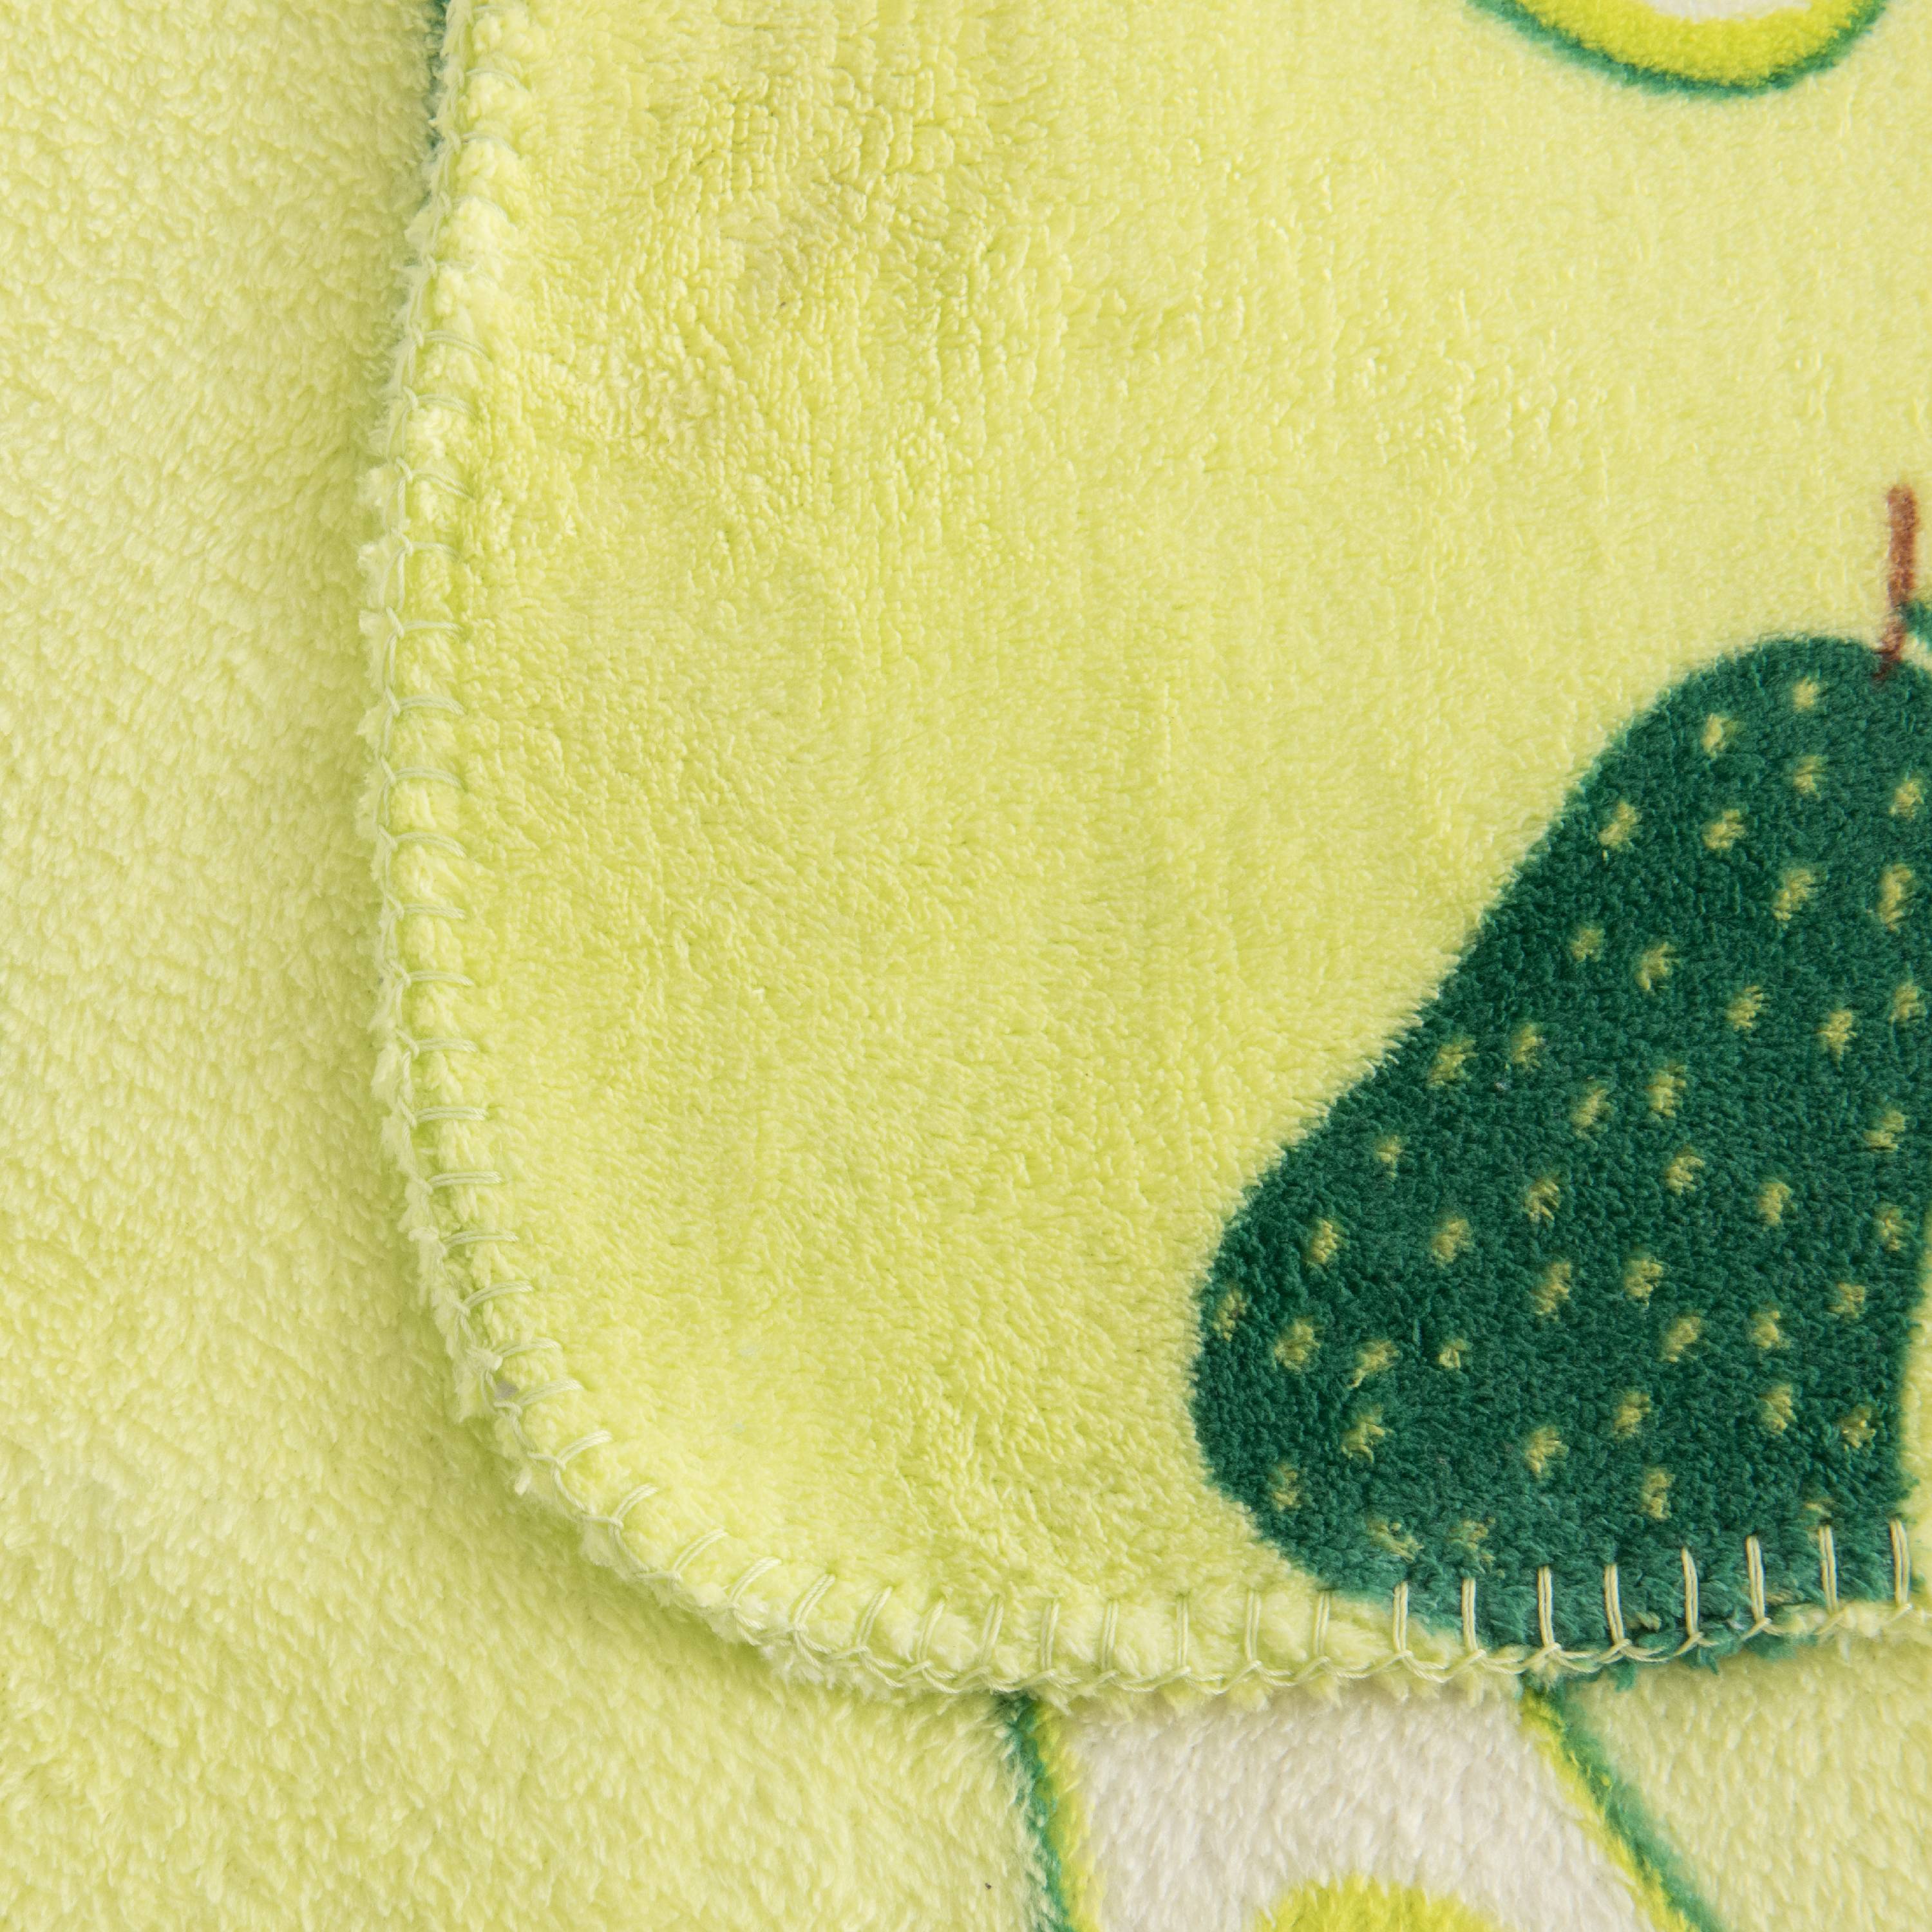 Mainstays Fleece Plush Throw Blanket, 50" x 60", Avocados, 2-Pack - image 3 of 11